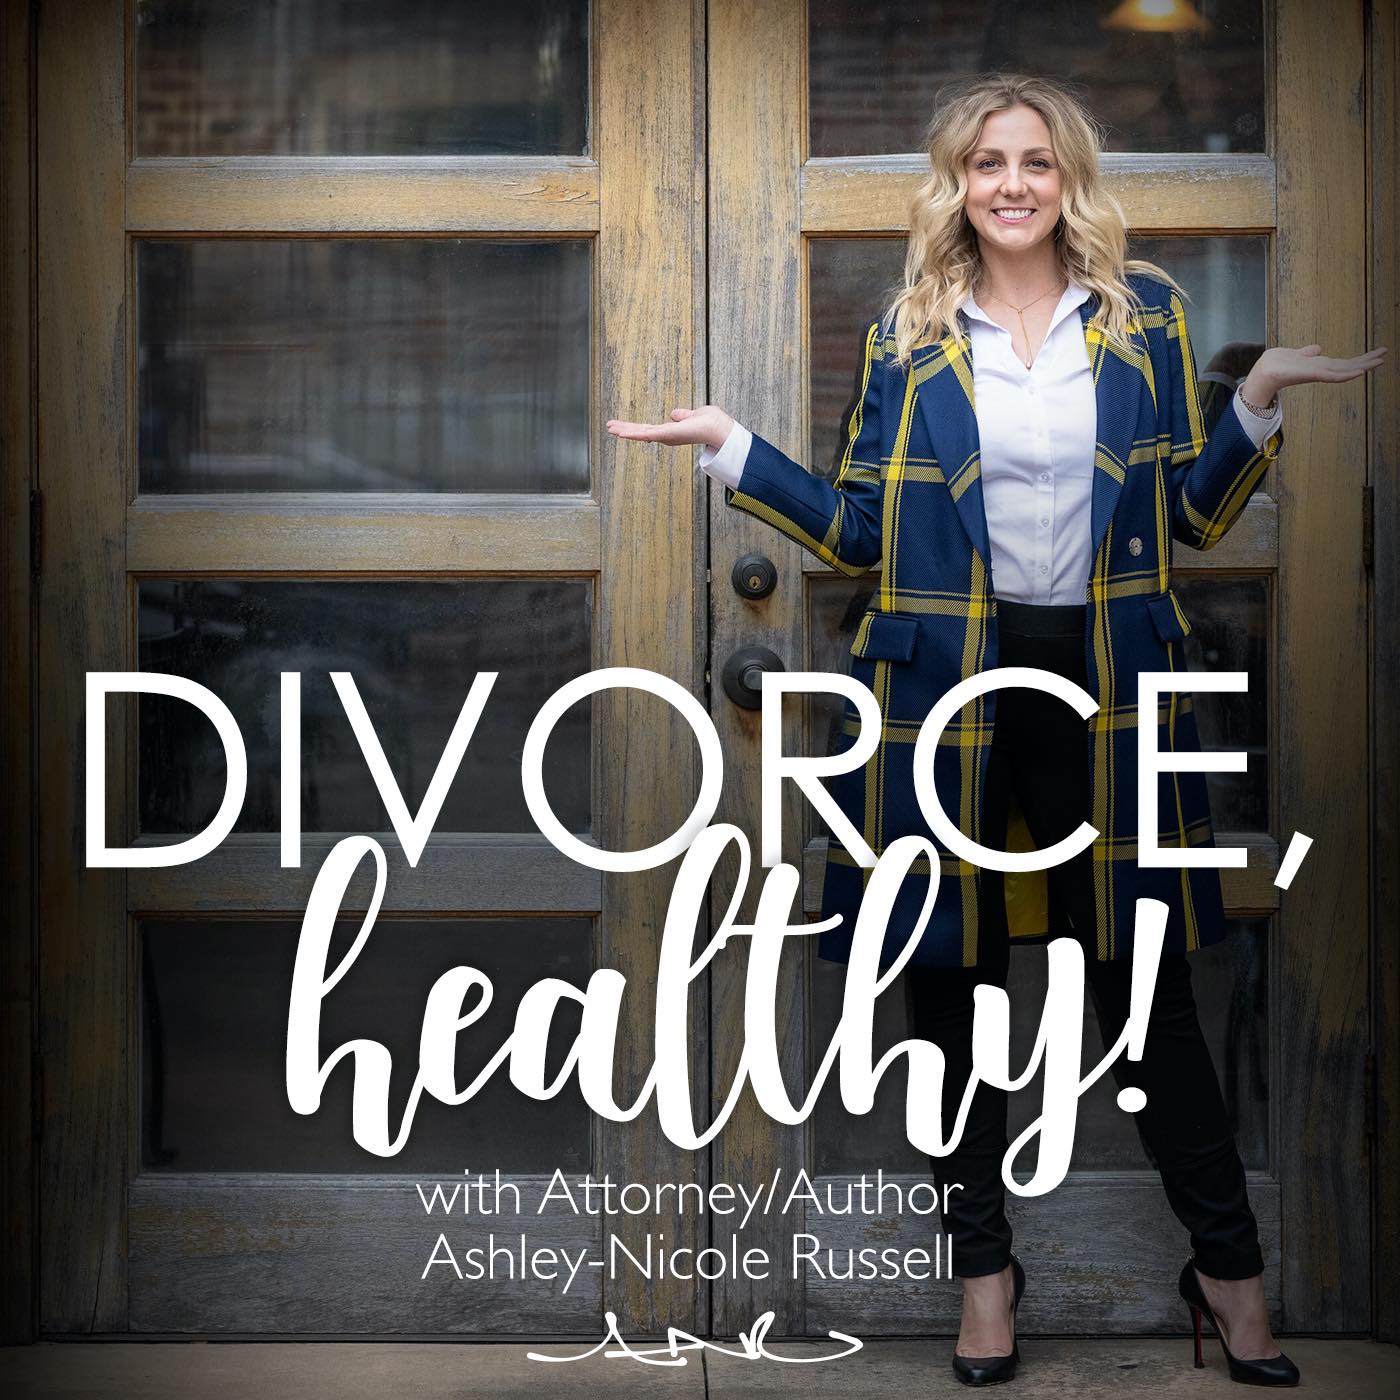 Divorce, Healthy!